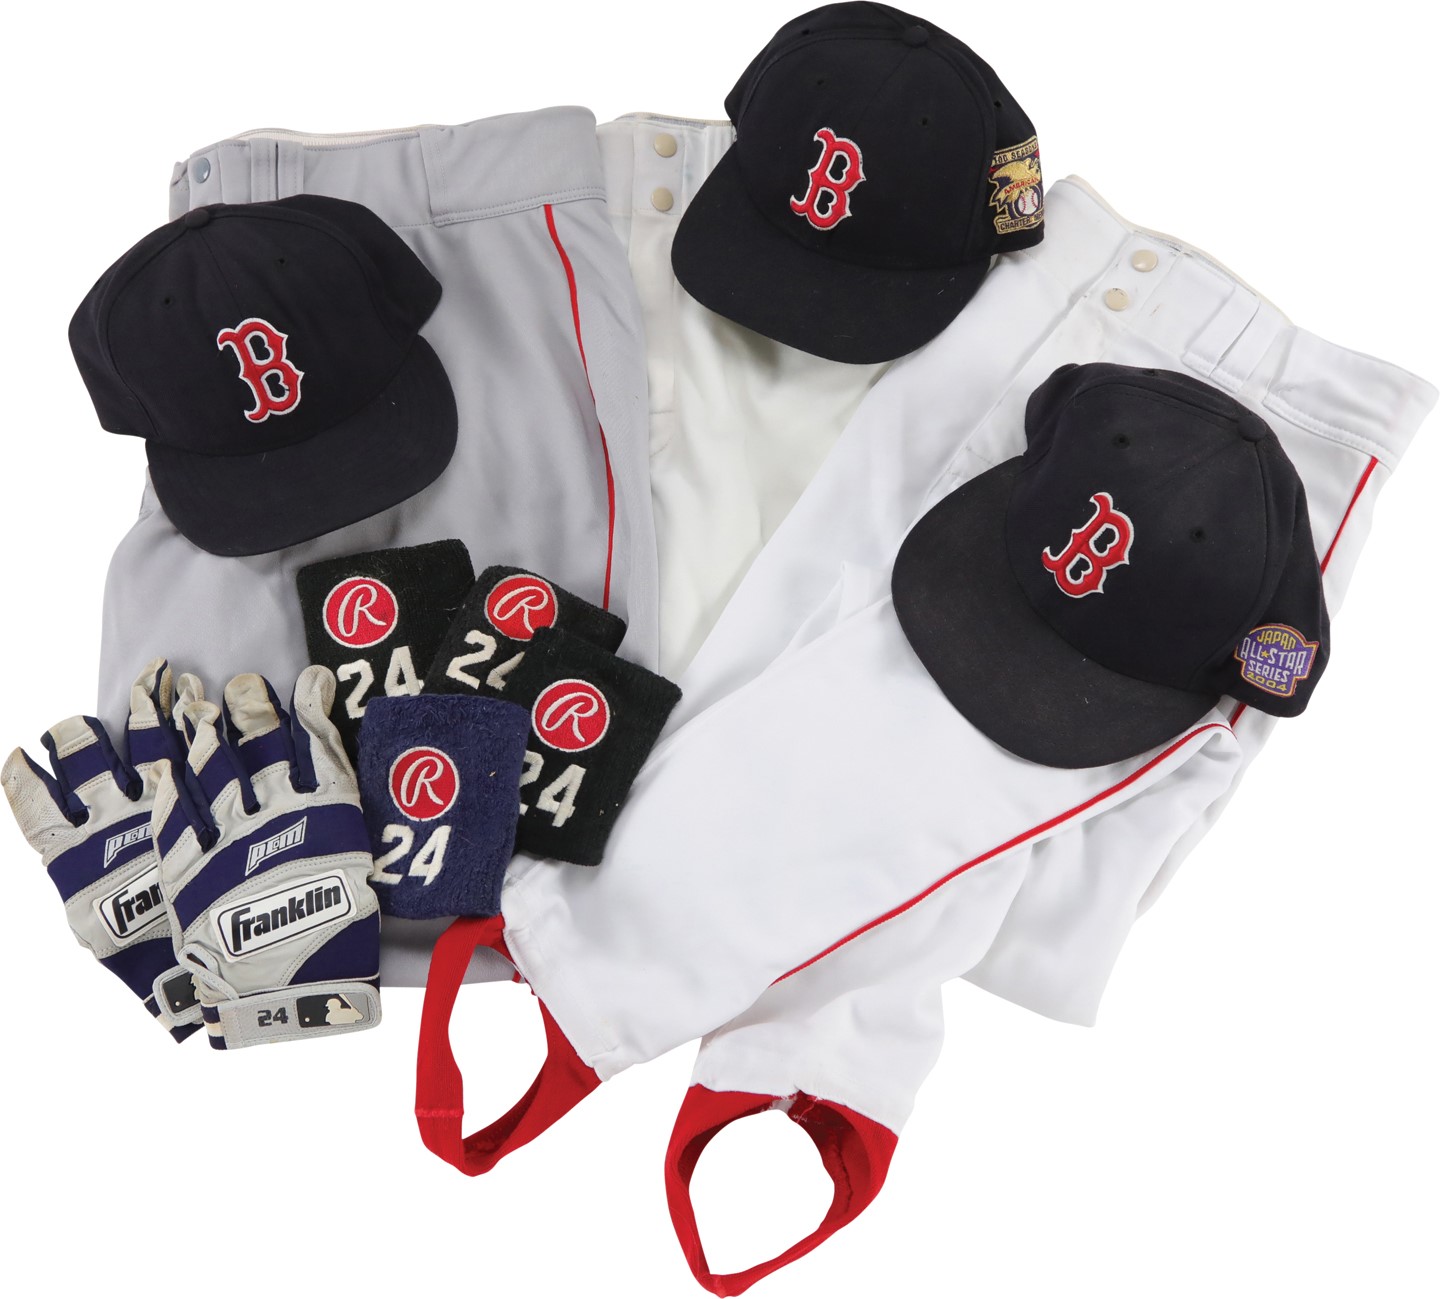 Baseball Equipment - Boston Red Sox Game Used Collection w/Pedro Martinez, Manny Ramirez & Nomar Garciaparra (11)